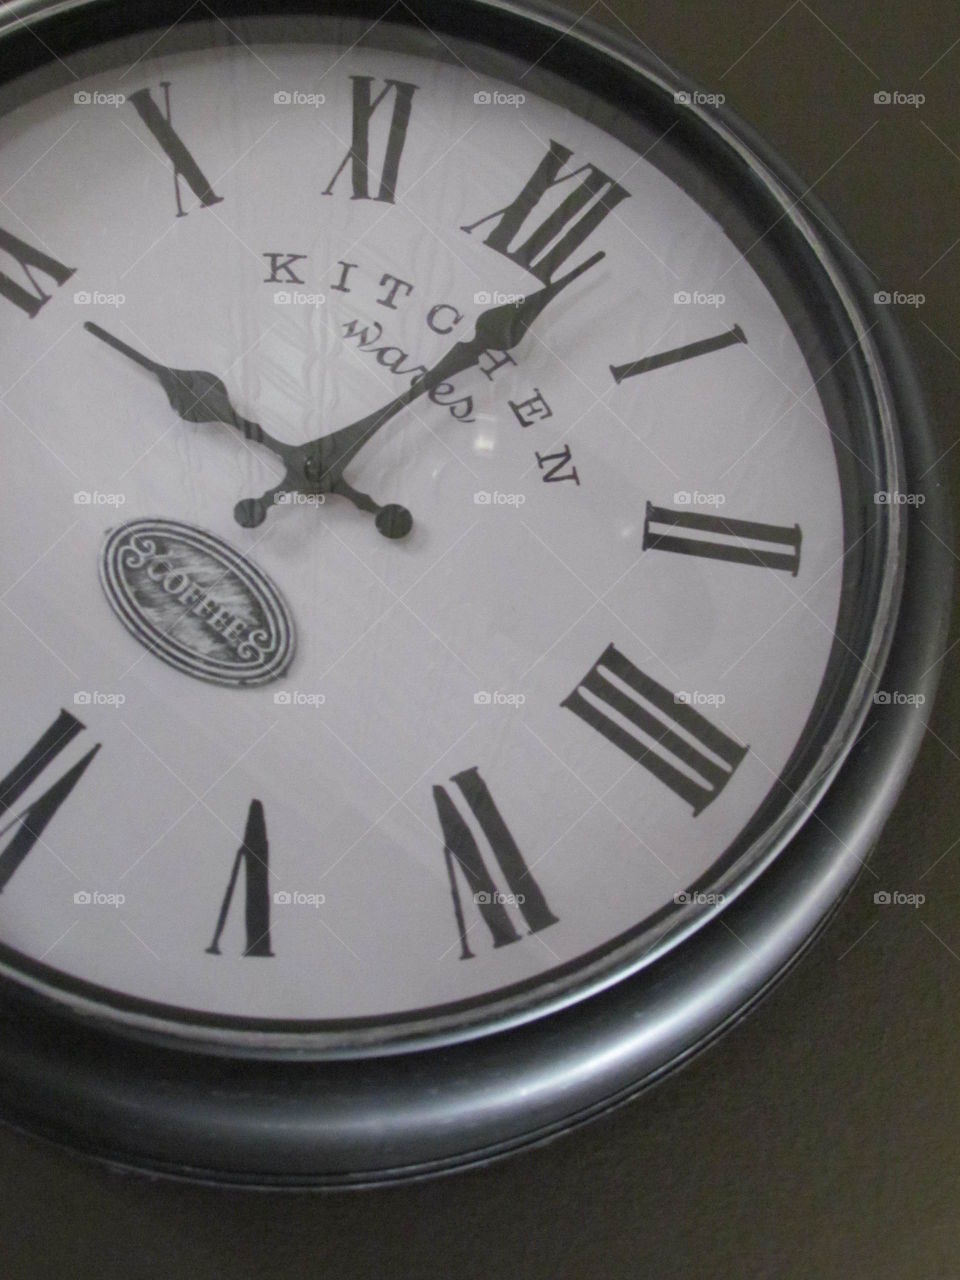 Steph's clock